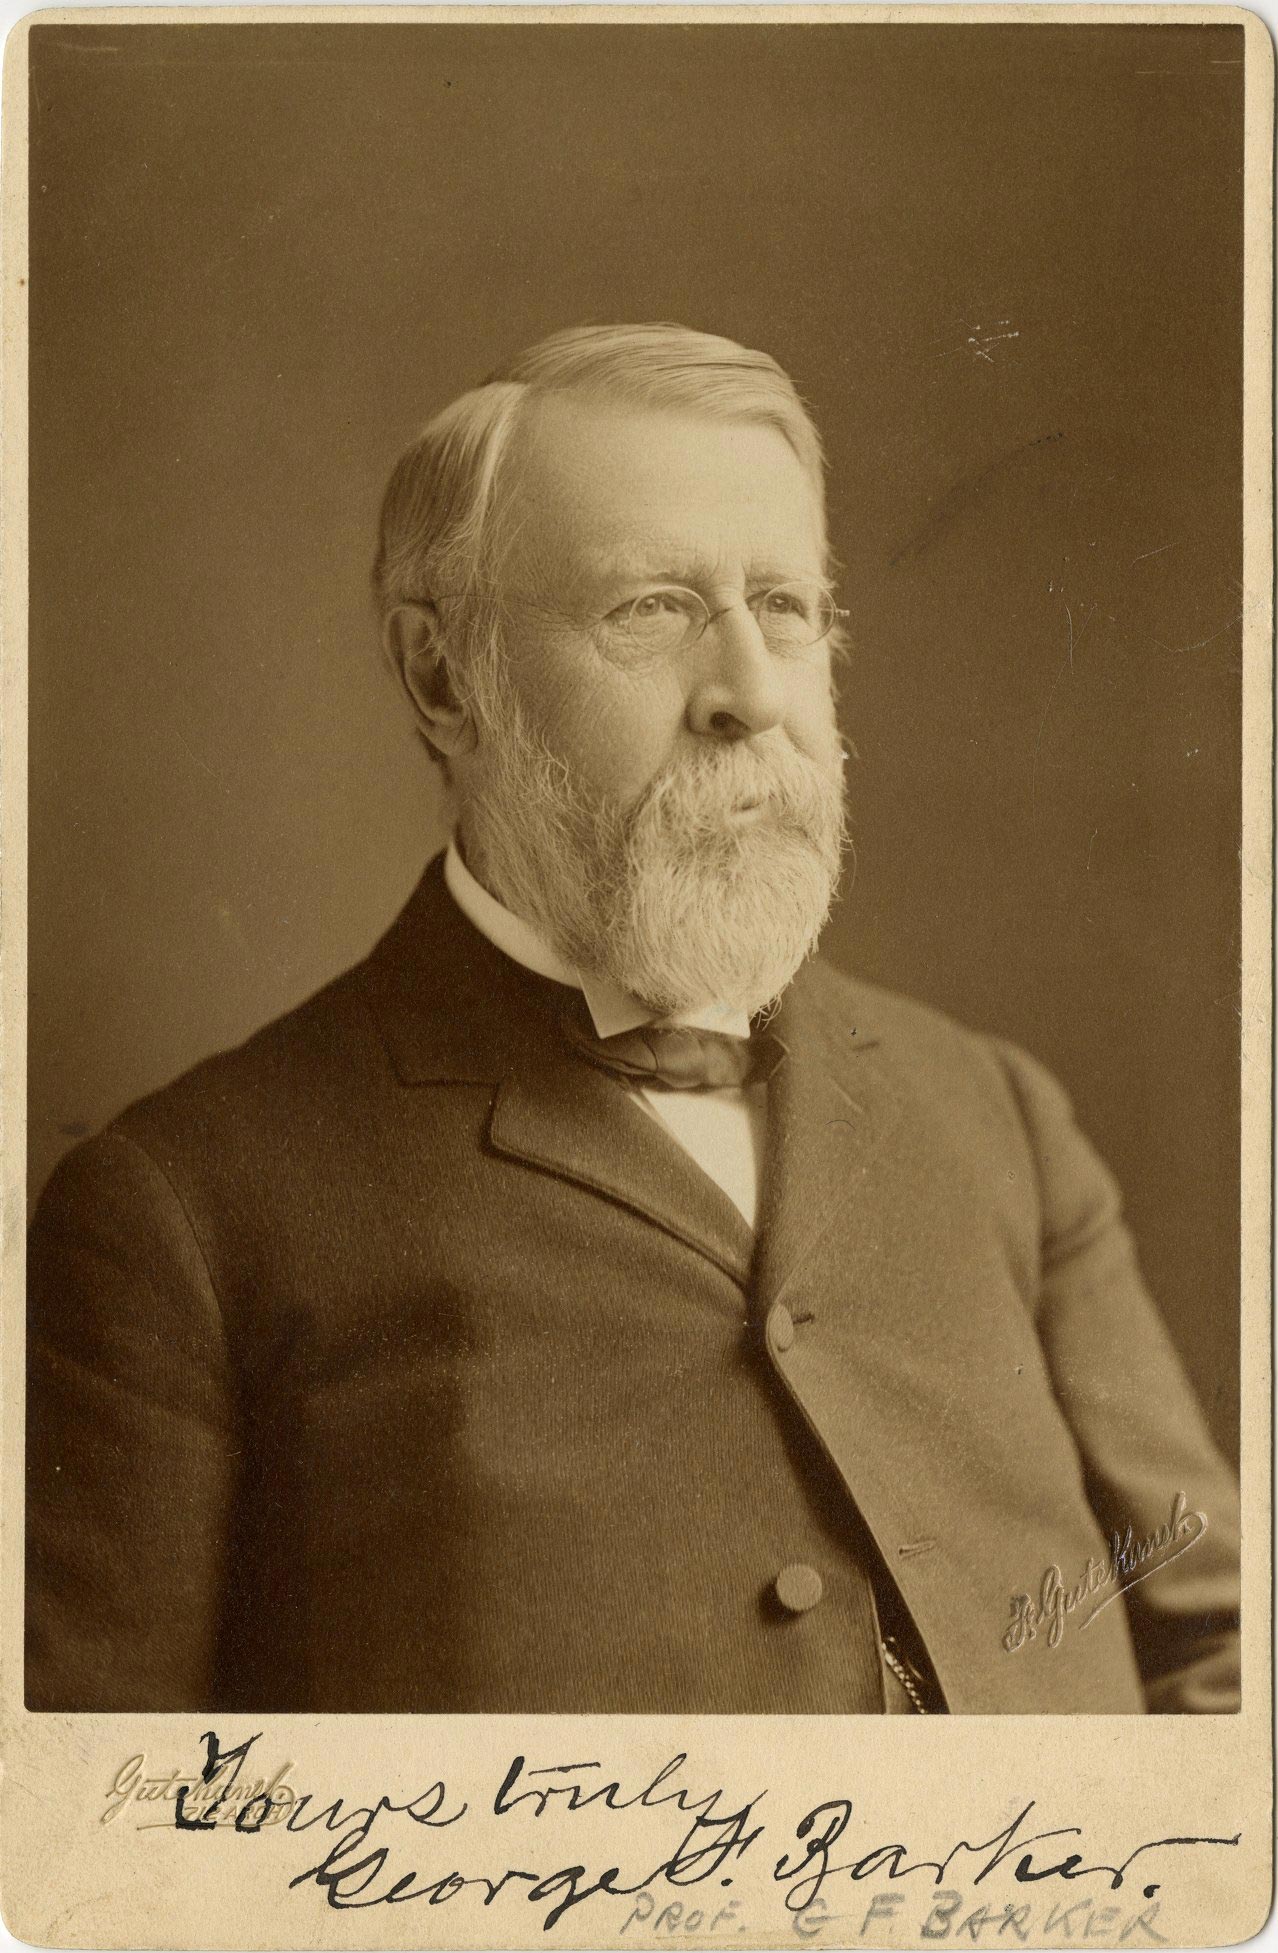 George Frederick Barker, c. 1900